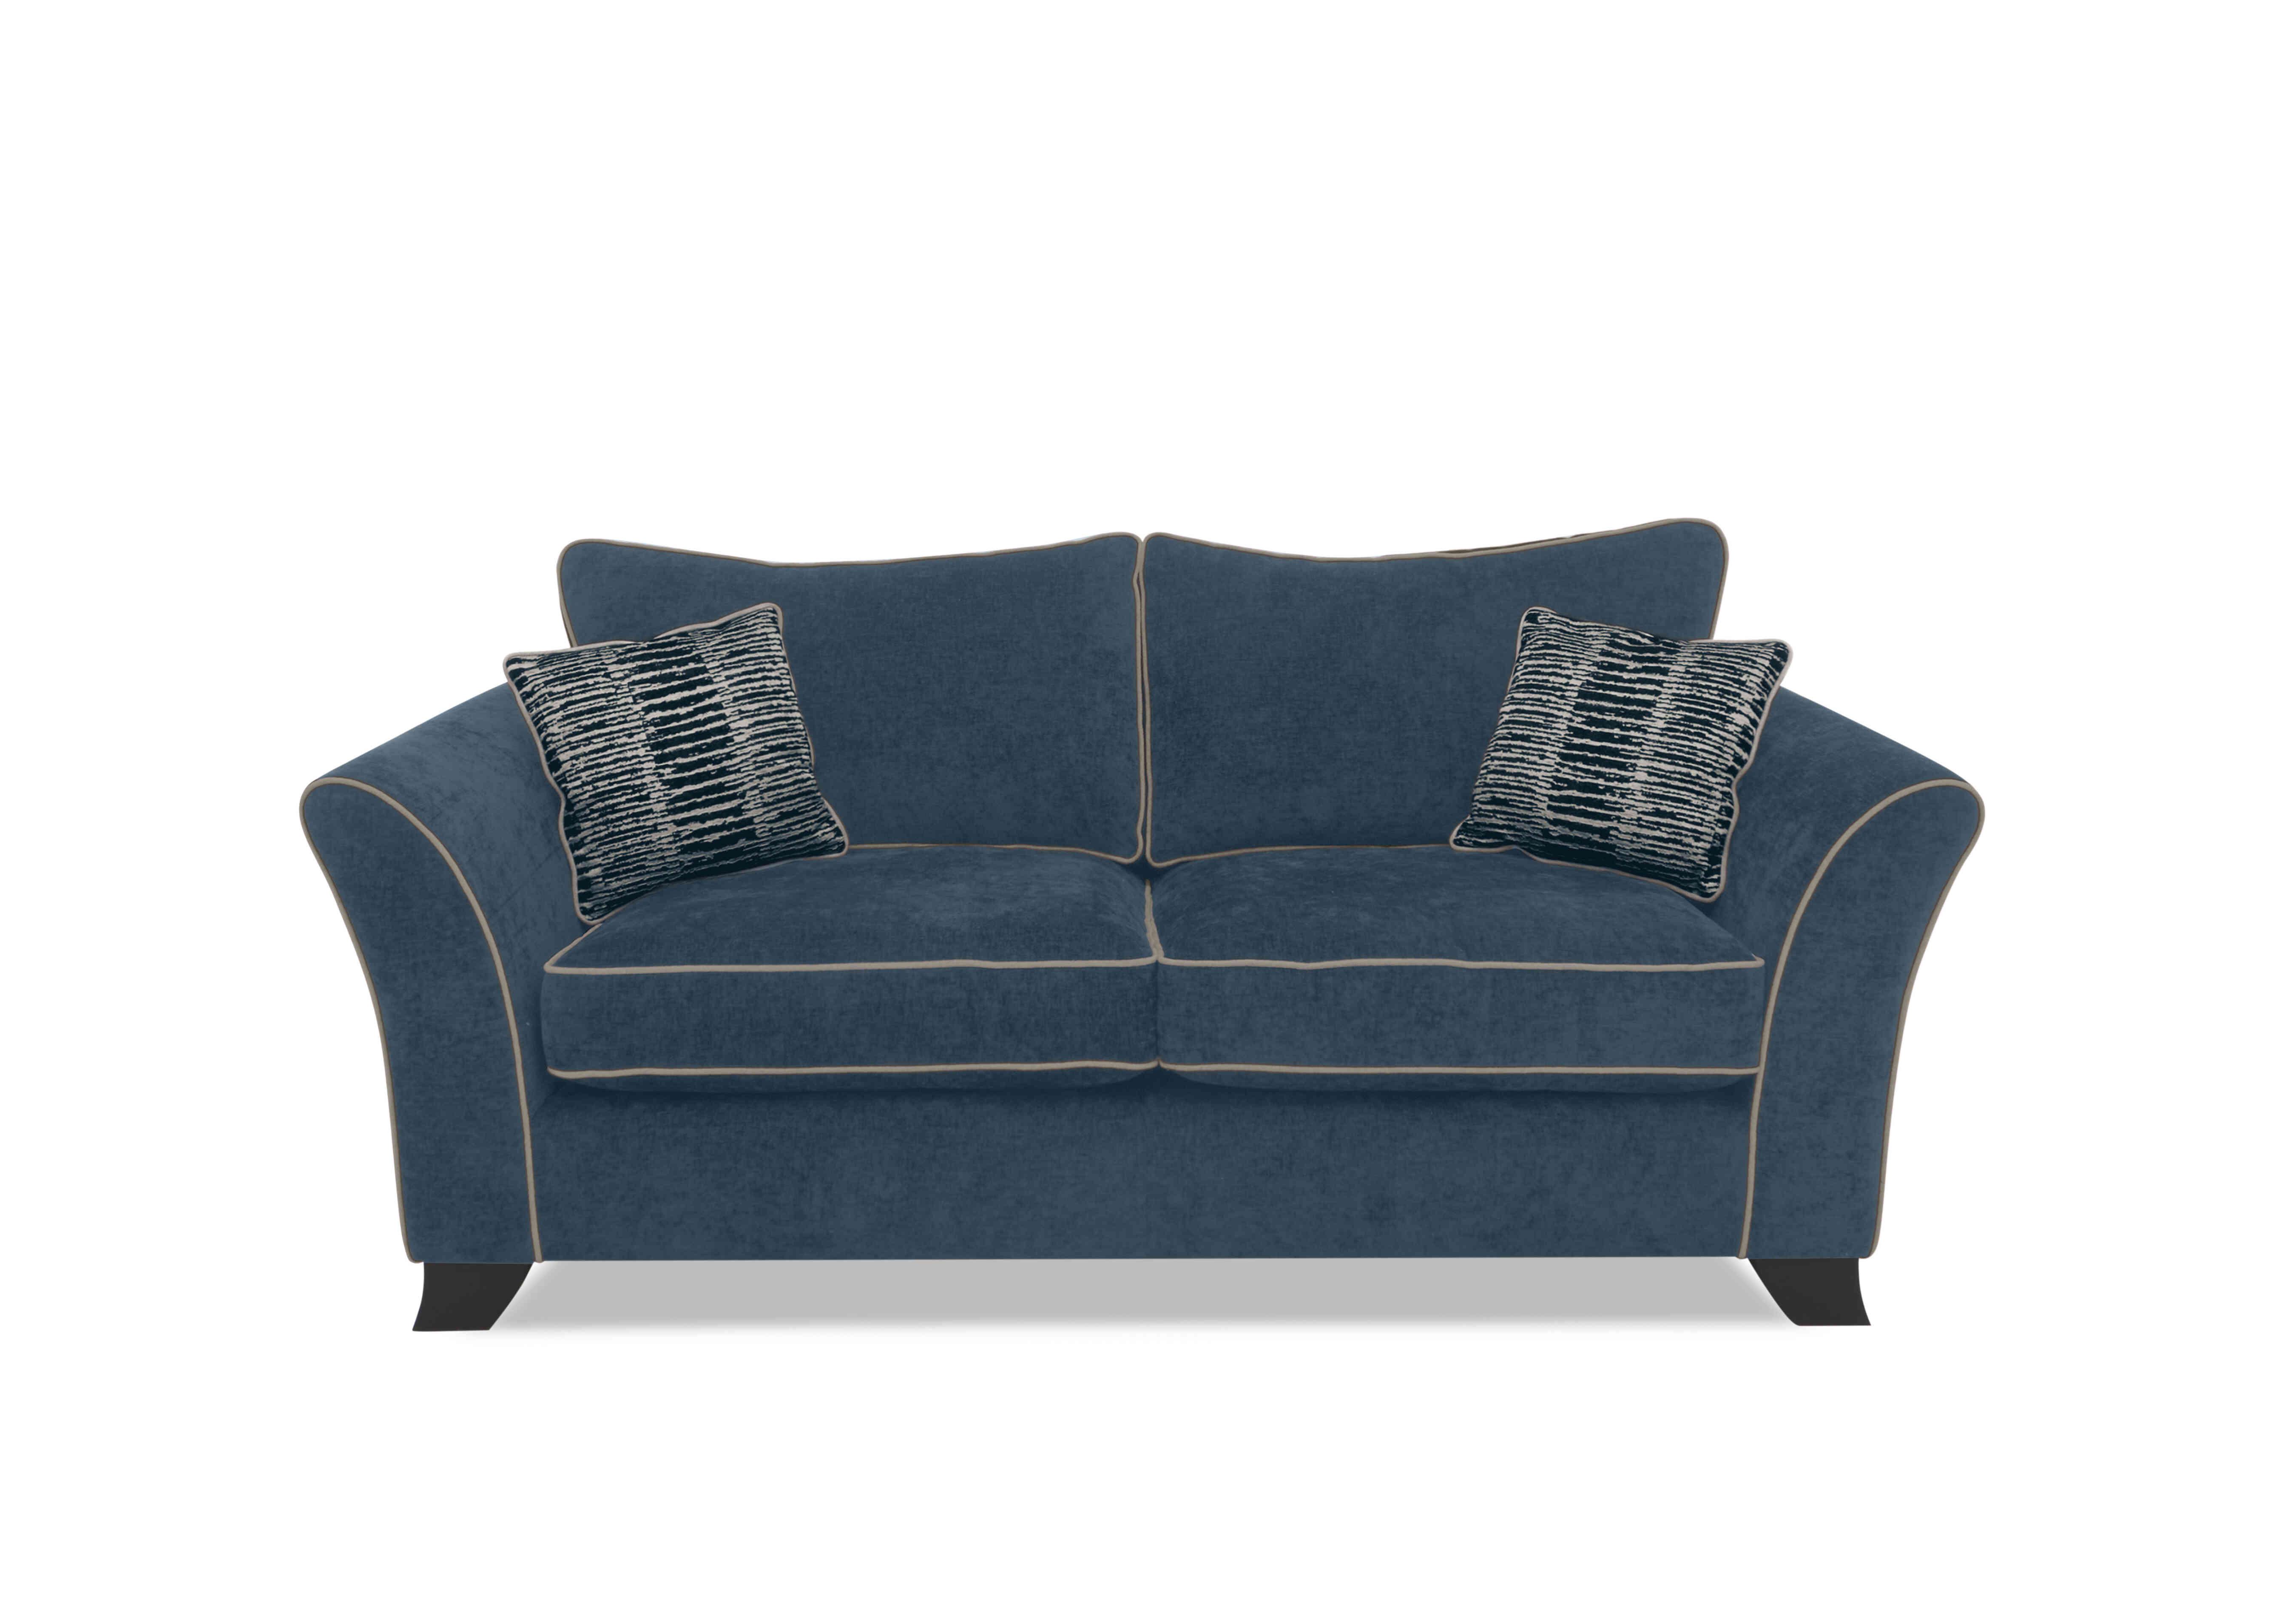 Stellar 3 Seater Classic Back Sofa Bed in Bolero Spruce Contrast on Furniture Village